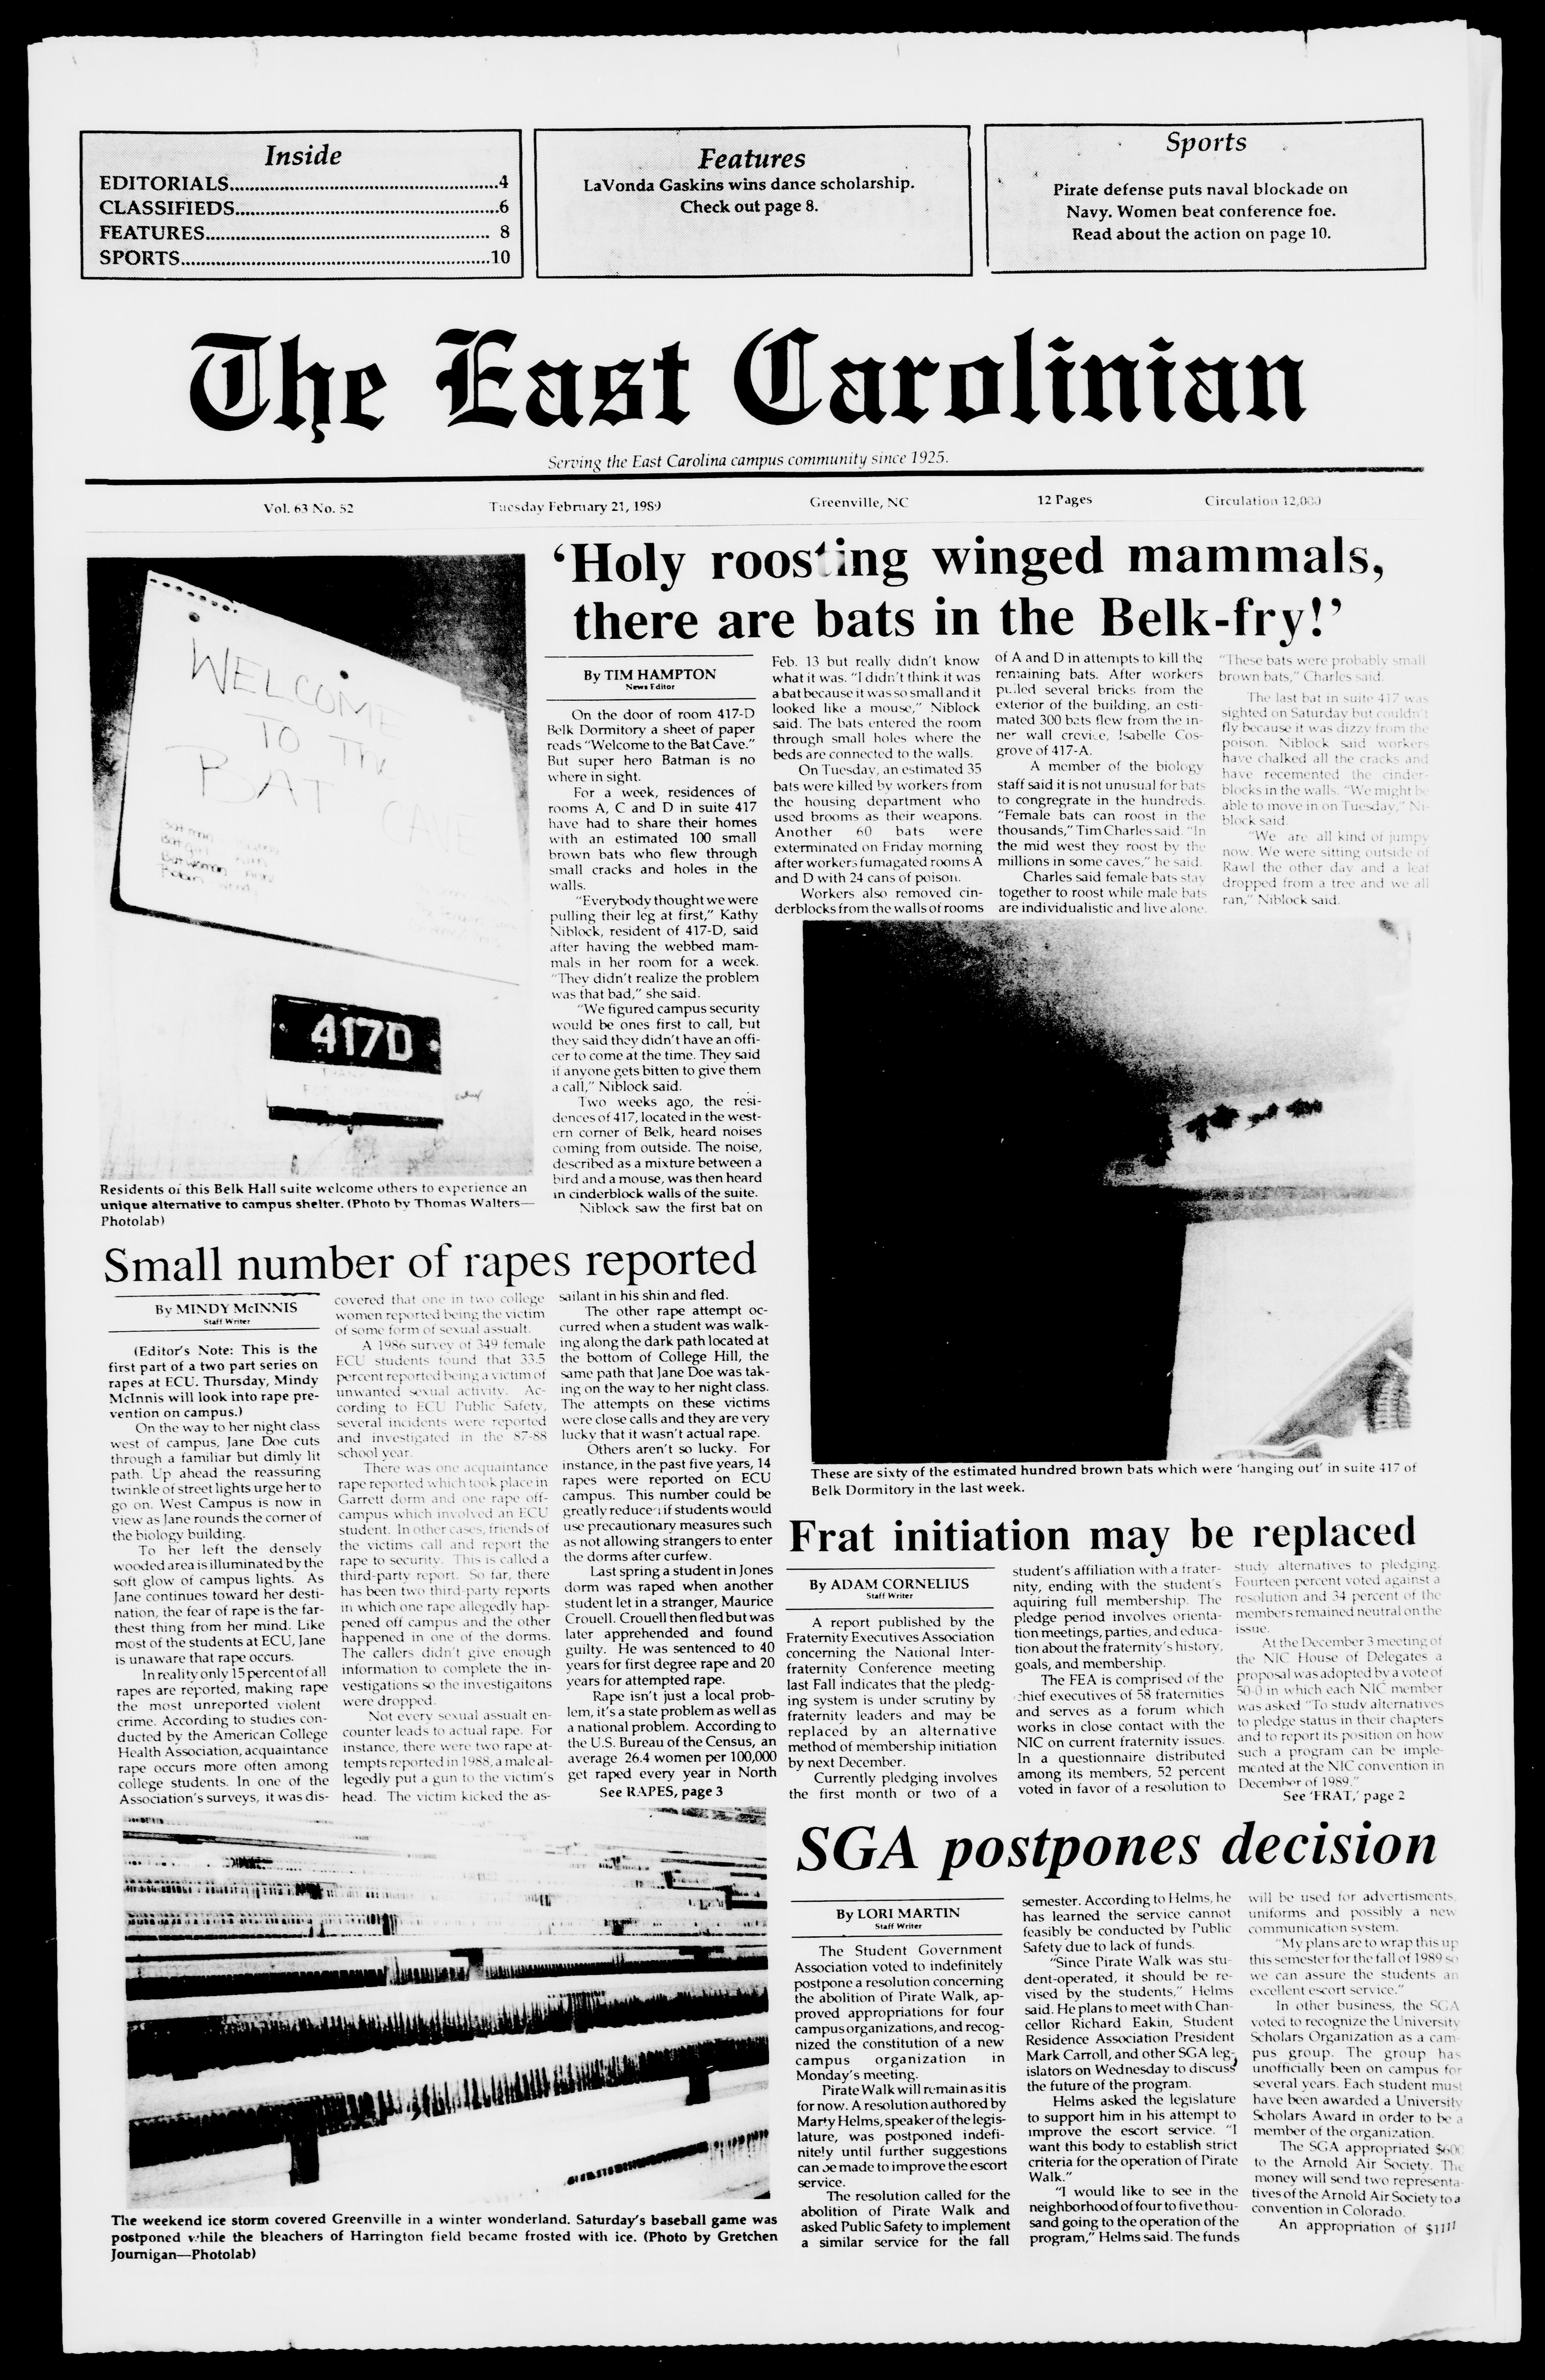 The East Carolinian, February 21, 1989 pic